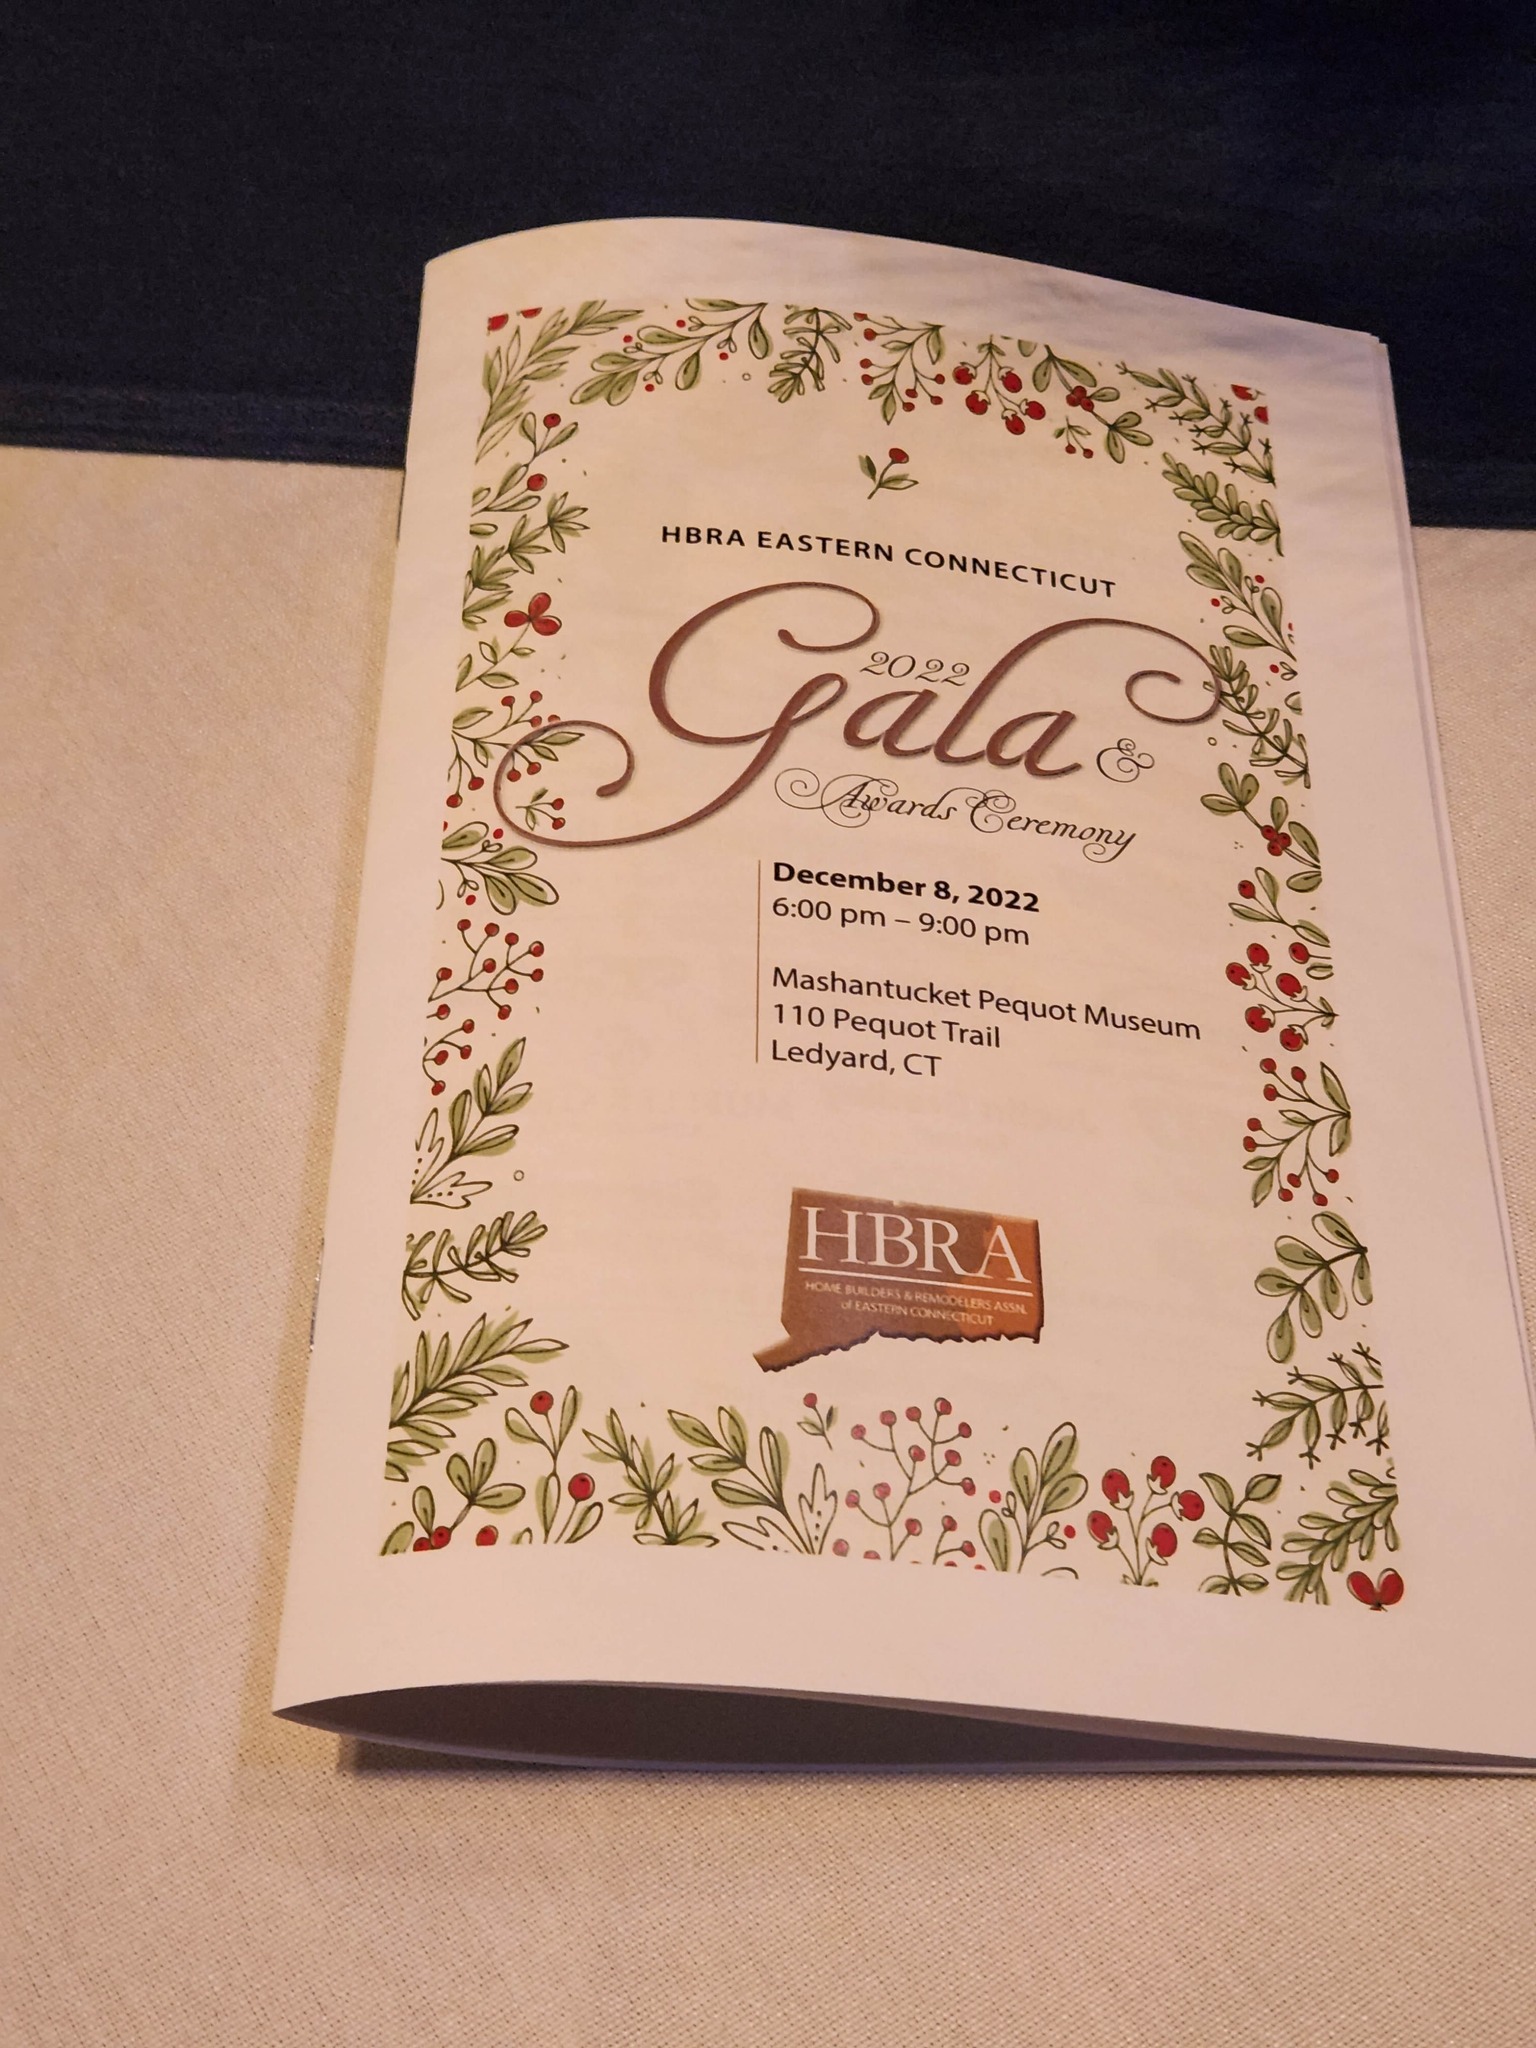 2022 Annual Gala & Awards Banquet